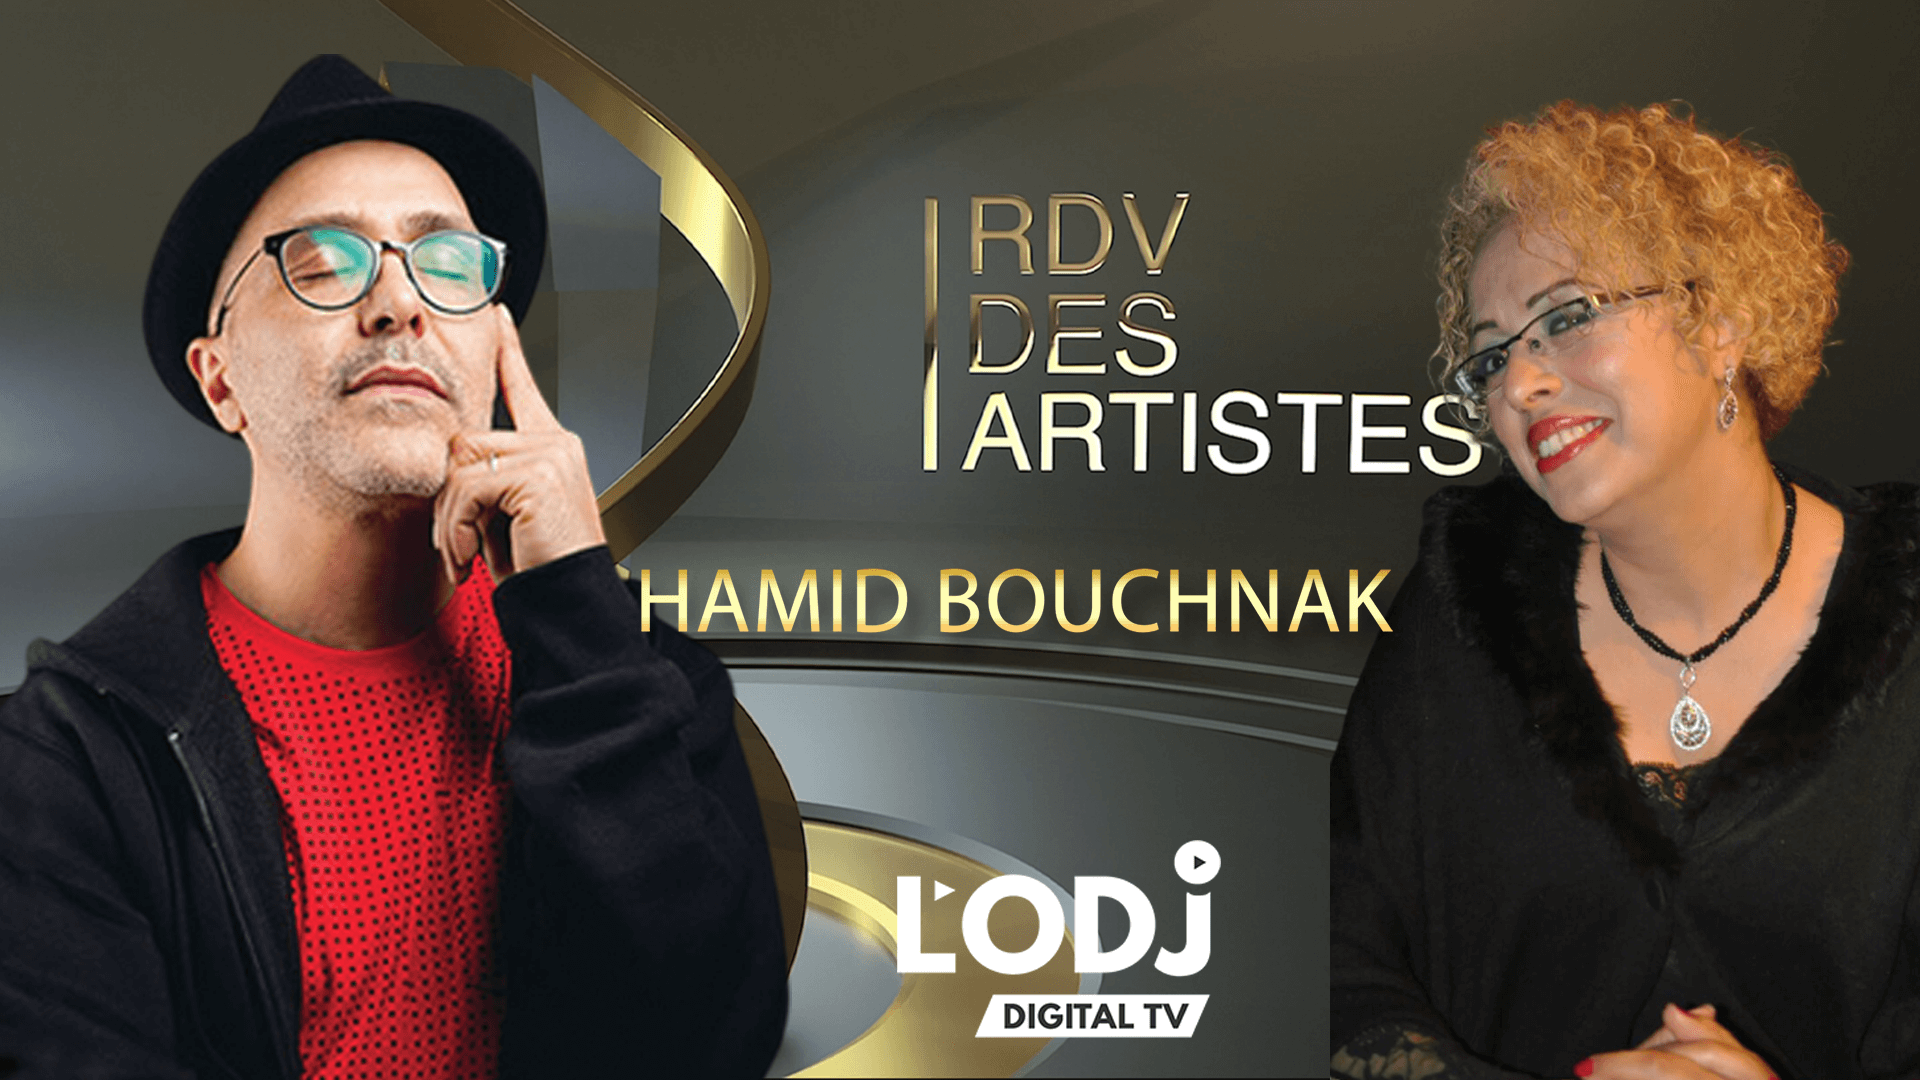 RDV des artistes برنامج "موعد الفنانين" يستضيف الفنان المقتدر حميد بوشناق